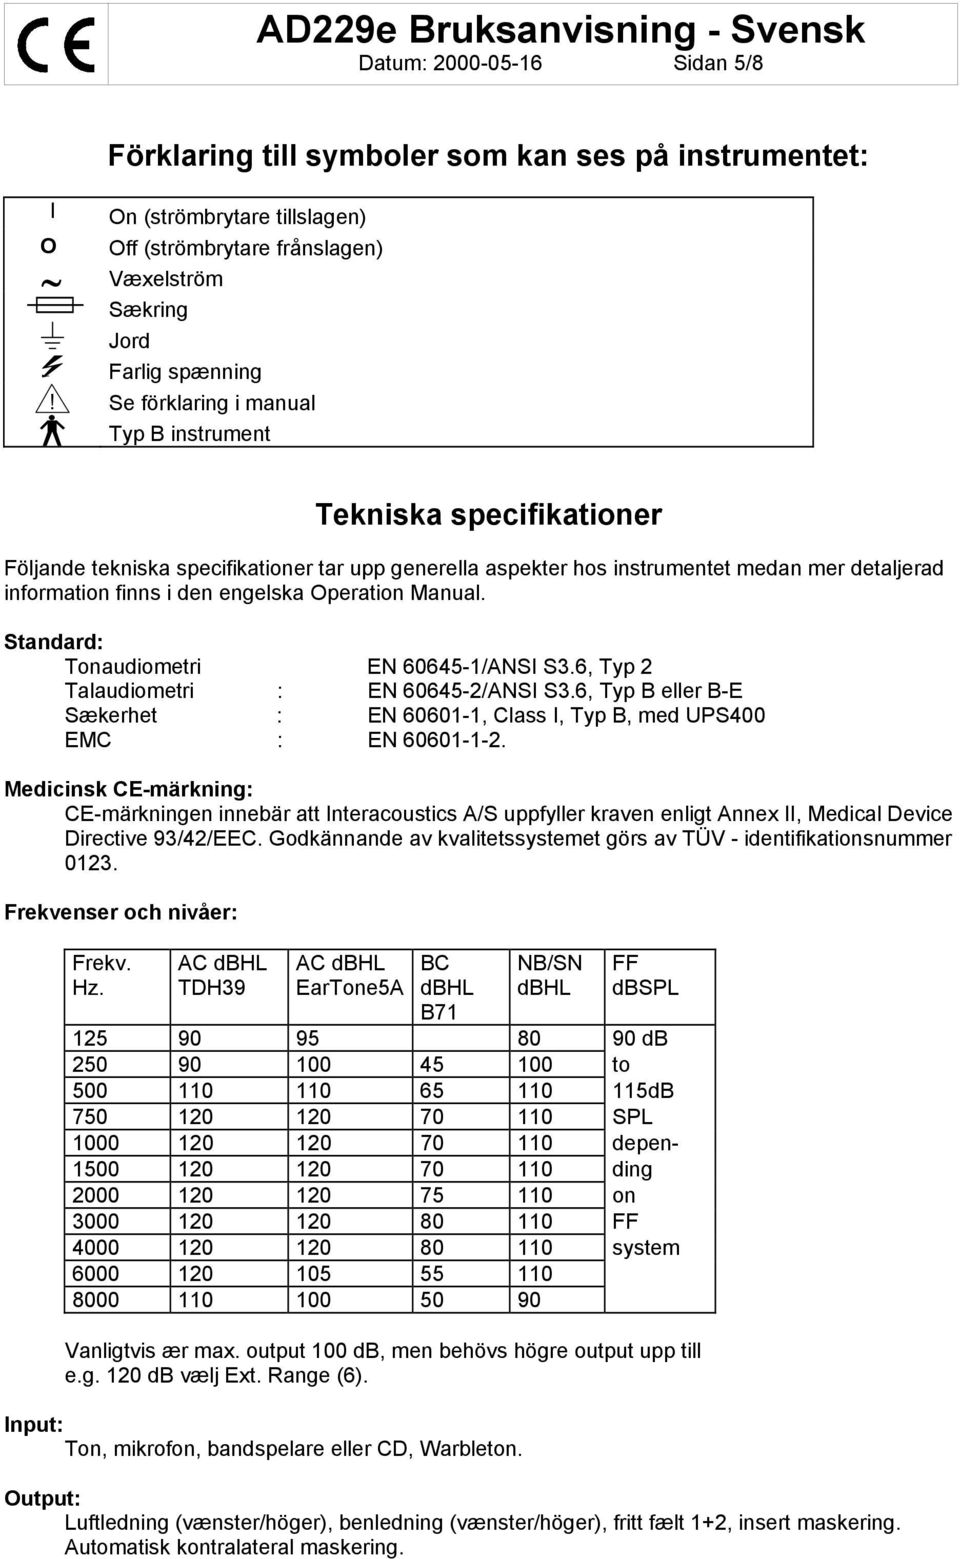 Operation Manual. Standard: Tonaudiometri EN 60645-1/ANSI S3.6, Typ 2 Talaudiometri : EN 60645-2/ANSI S3.6, Typ B eller B-E Sækerhet : EN 60601-1, Class I, Typ B, med UPS400 EMC : EN 60601-1-2.